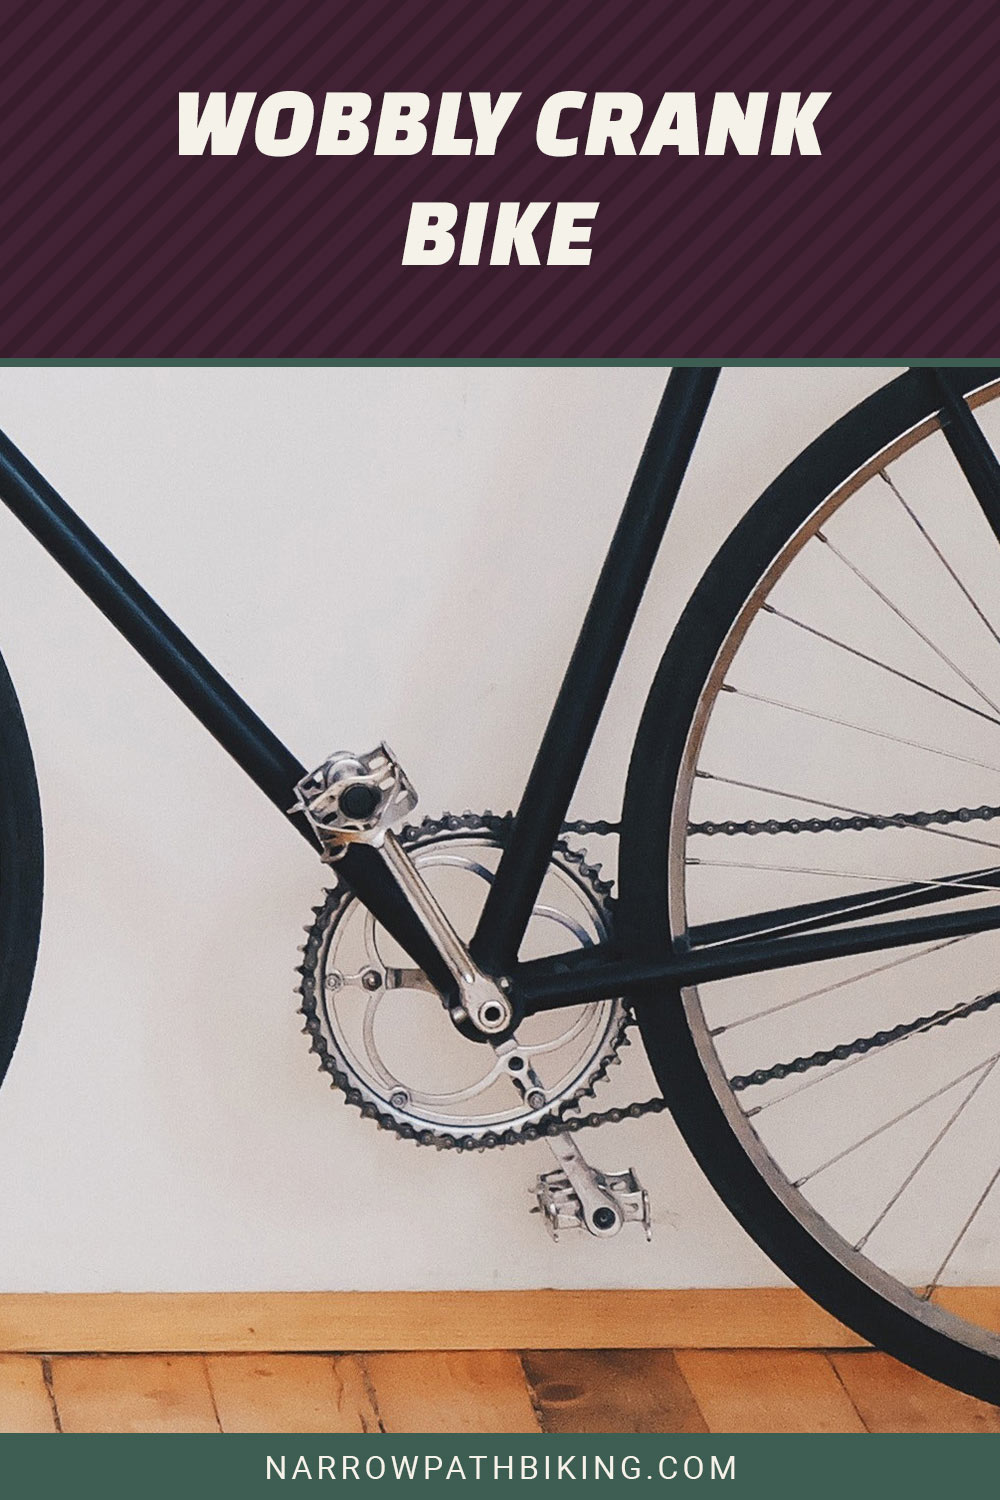 Crank on a bike - Wobbly Crank Bike